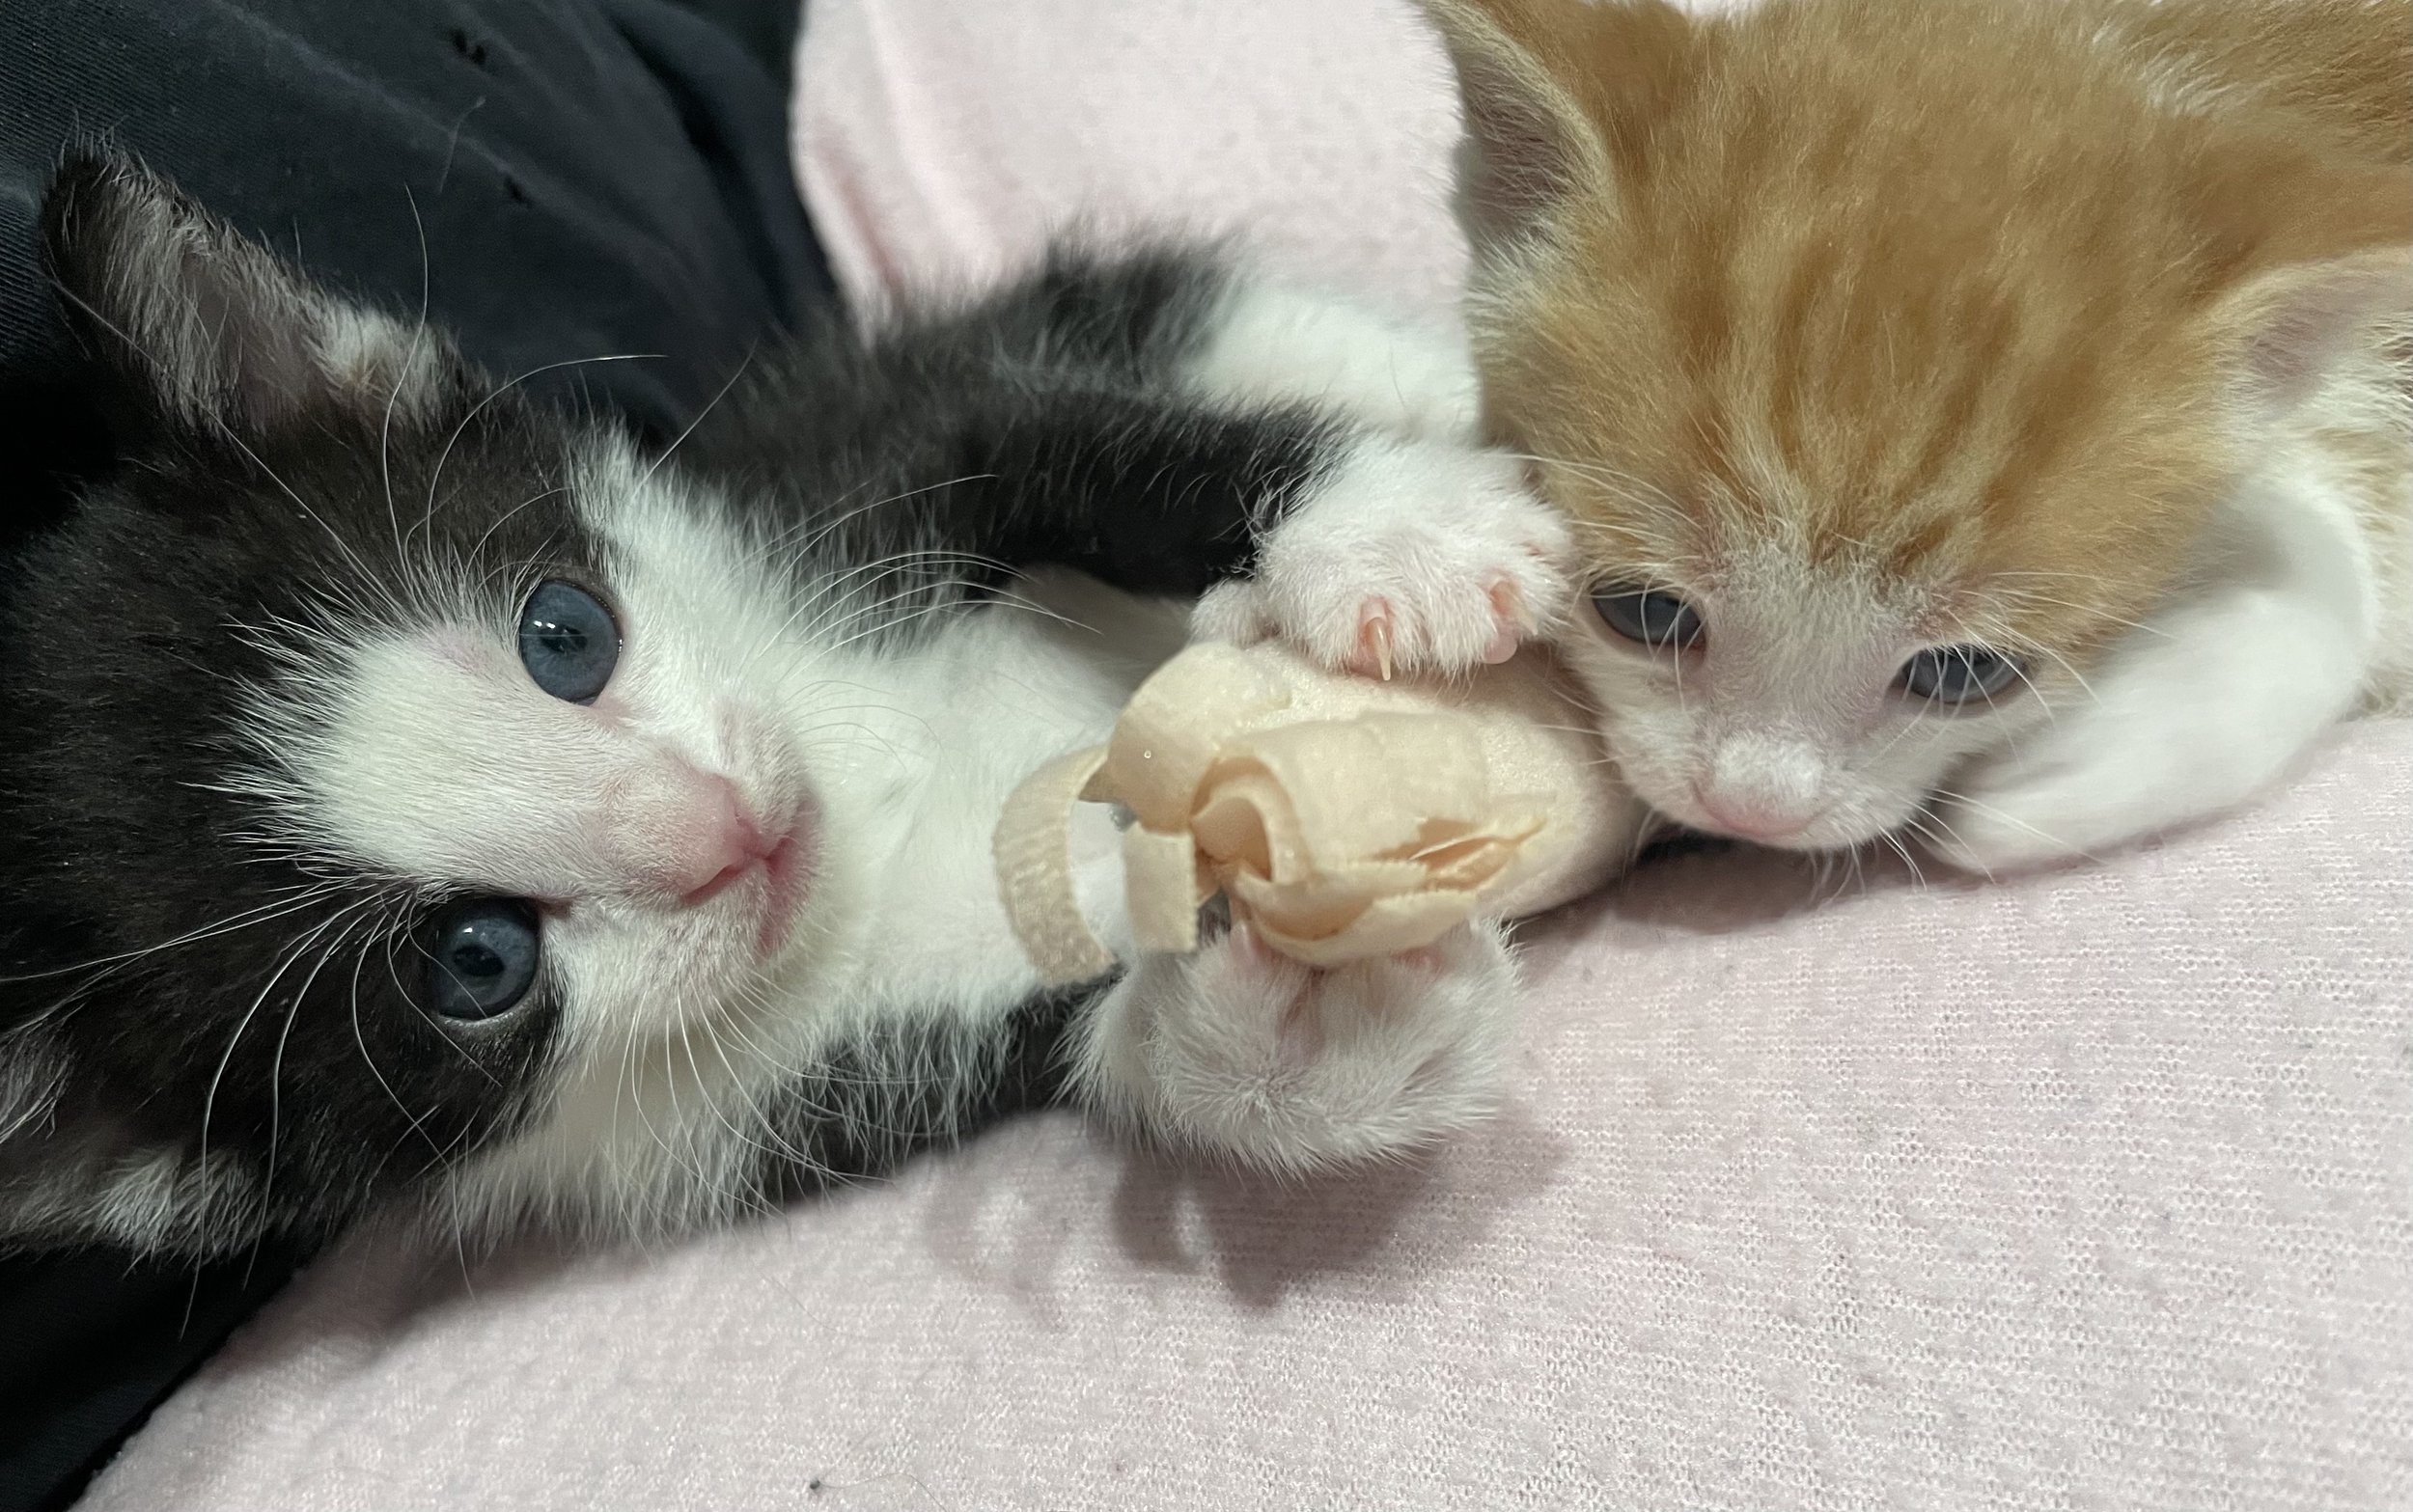 CATS Bridge To Rescue  Cat & Kitten Pet Adoptions